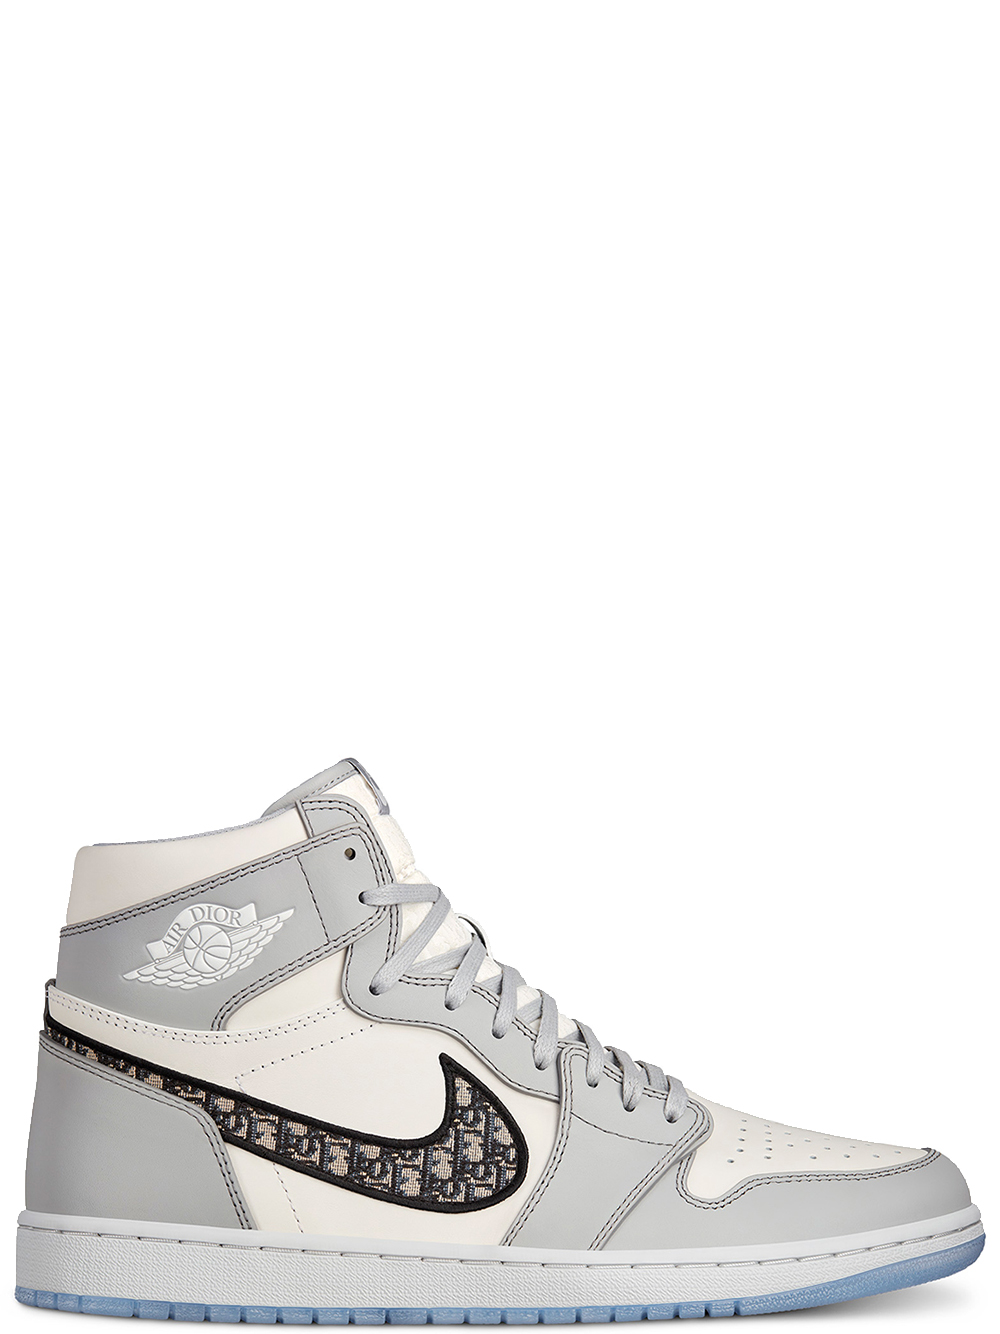 Nike Air Jordan 1 High Dior